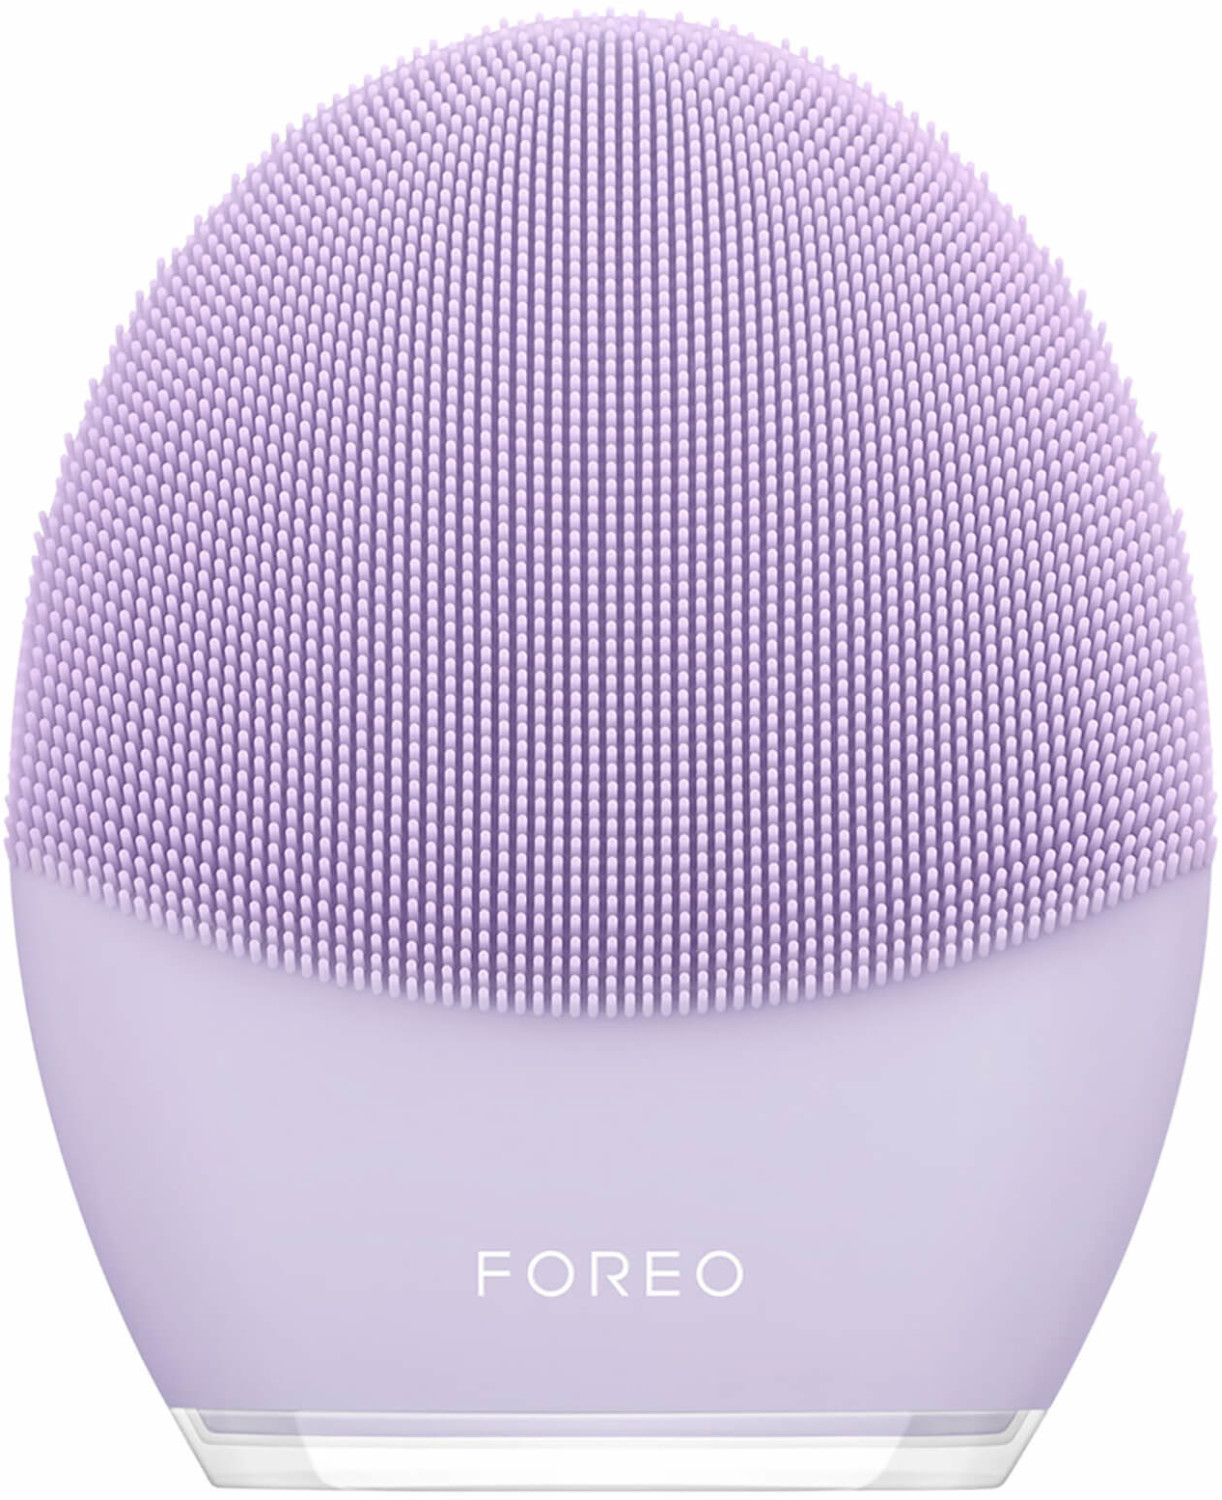 Image of Foreo Luna 3 for Sensitive Skin